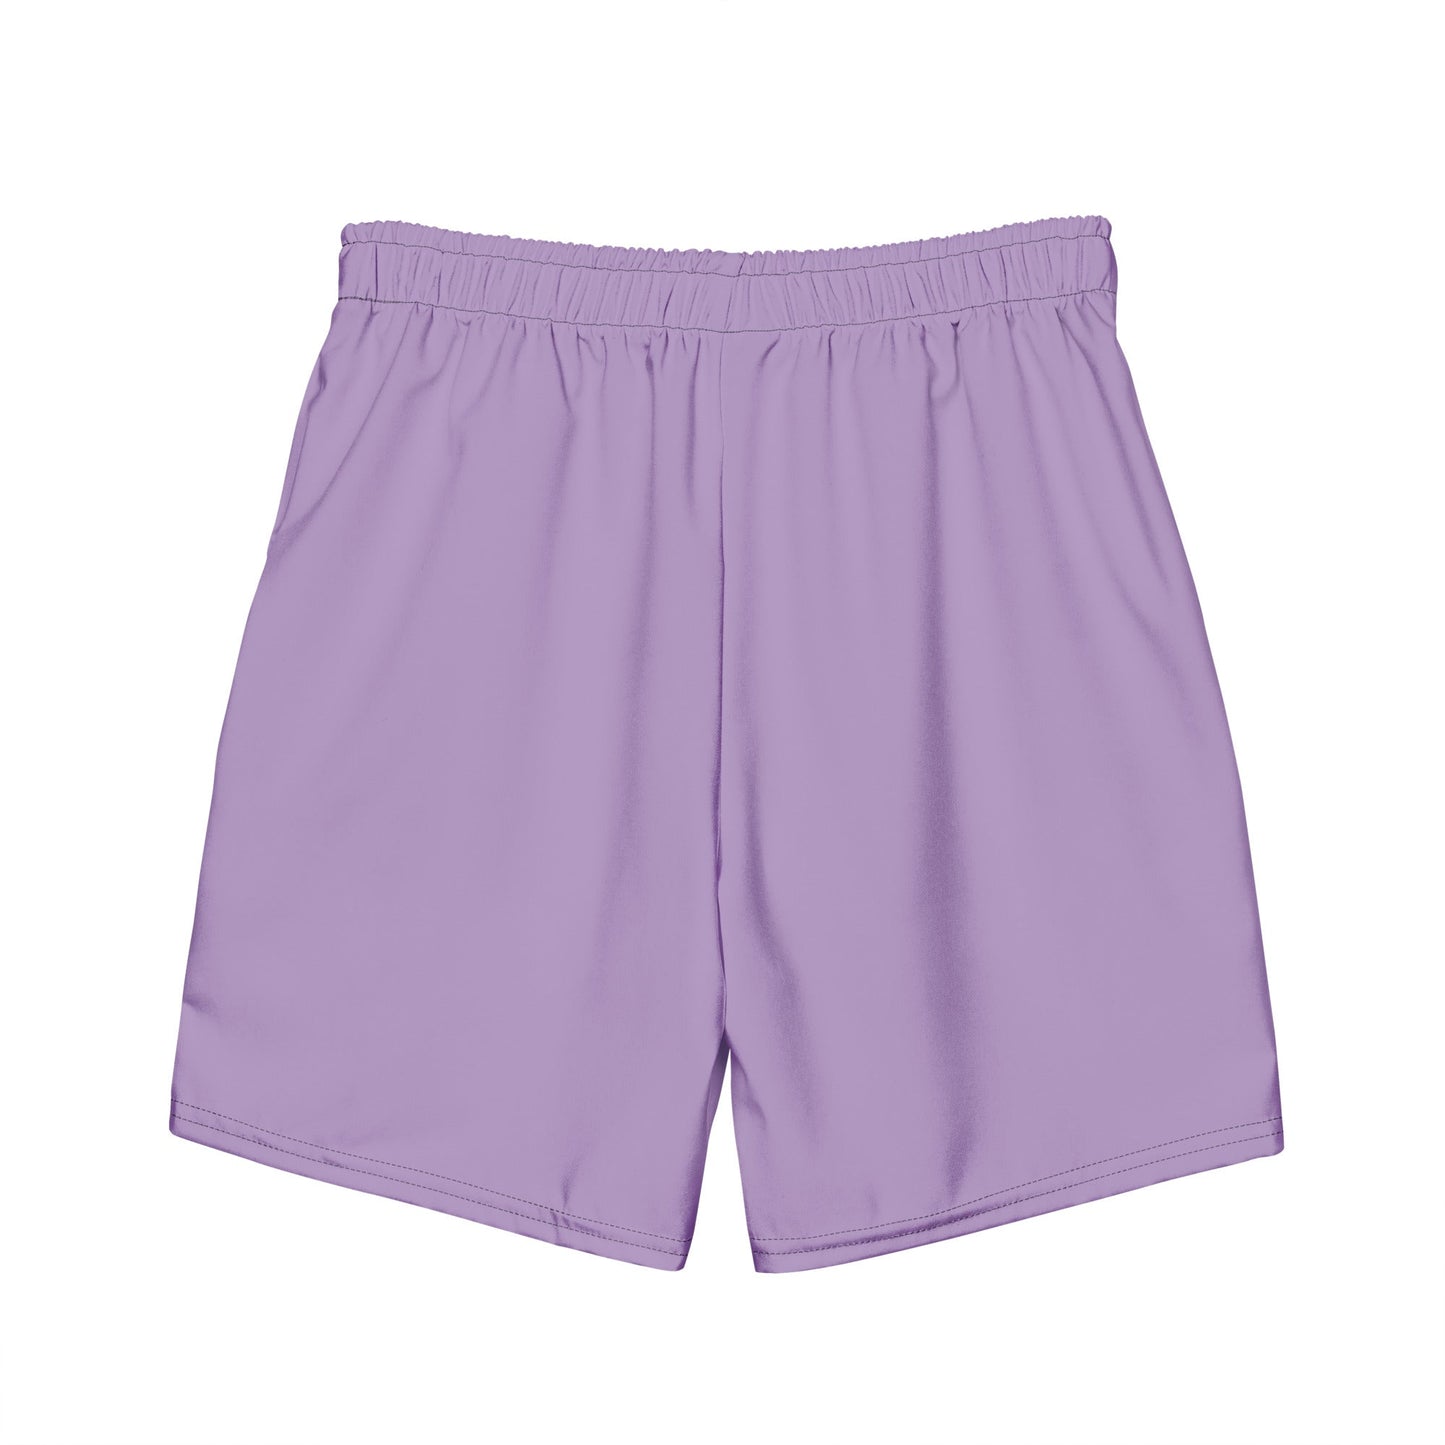 Men's Purple Eco Board Shorts - Tropical Seas Clothing 